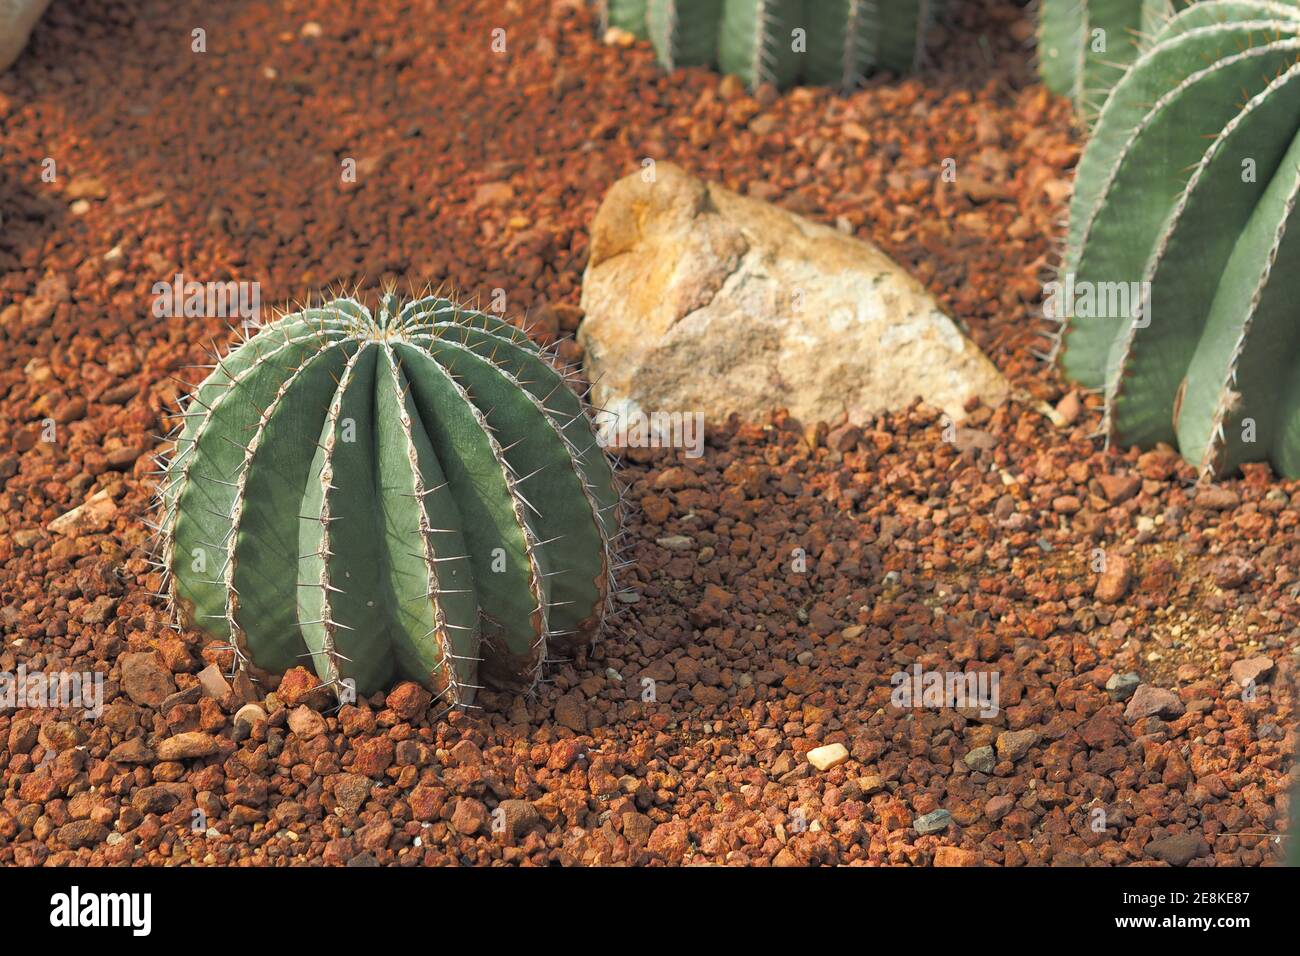 Echinocactus grusonii on the rocky ground in the greenhouse Stock Photo